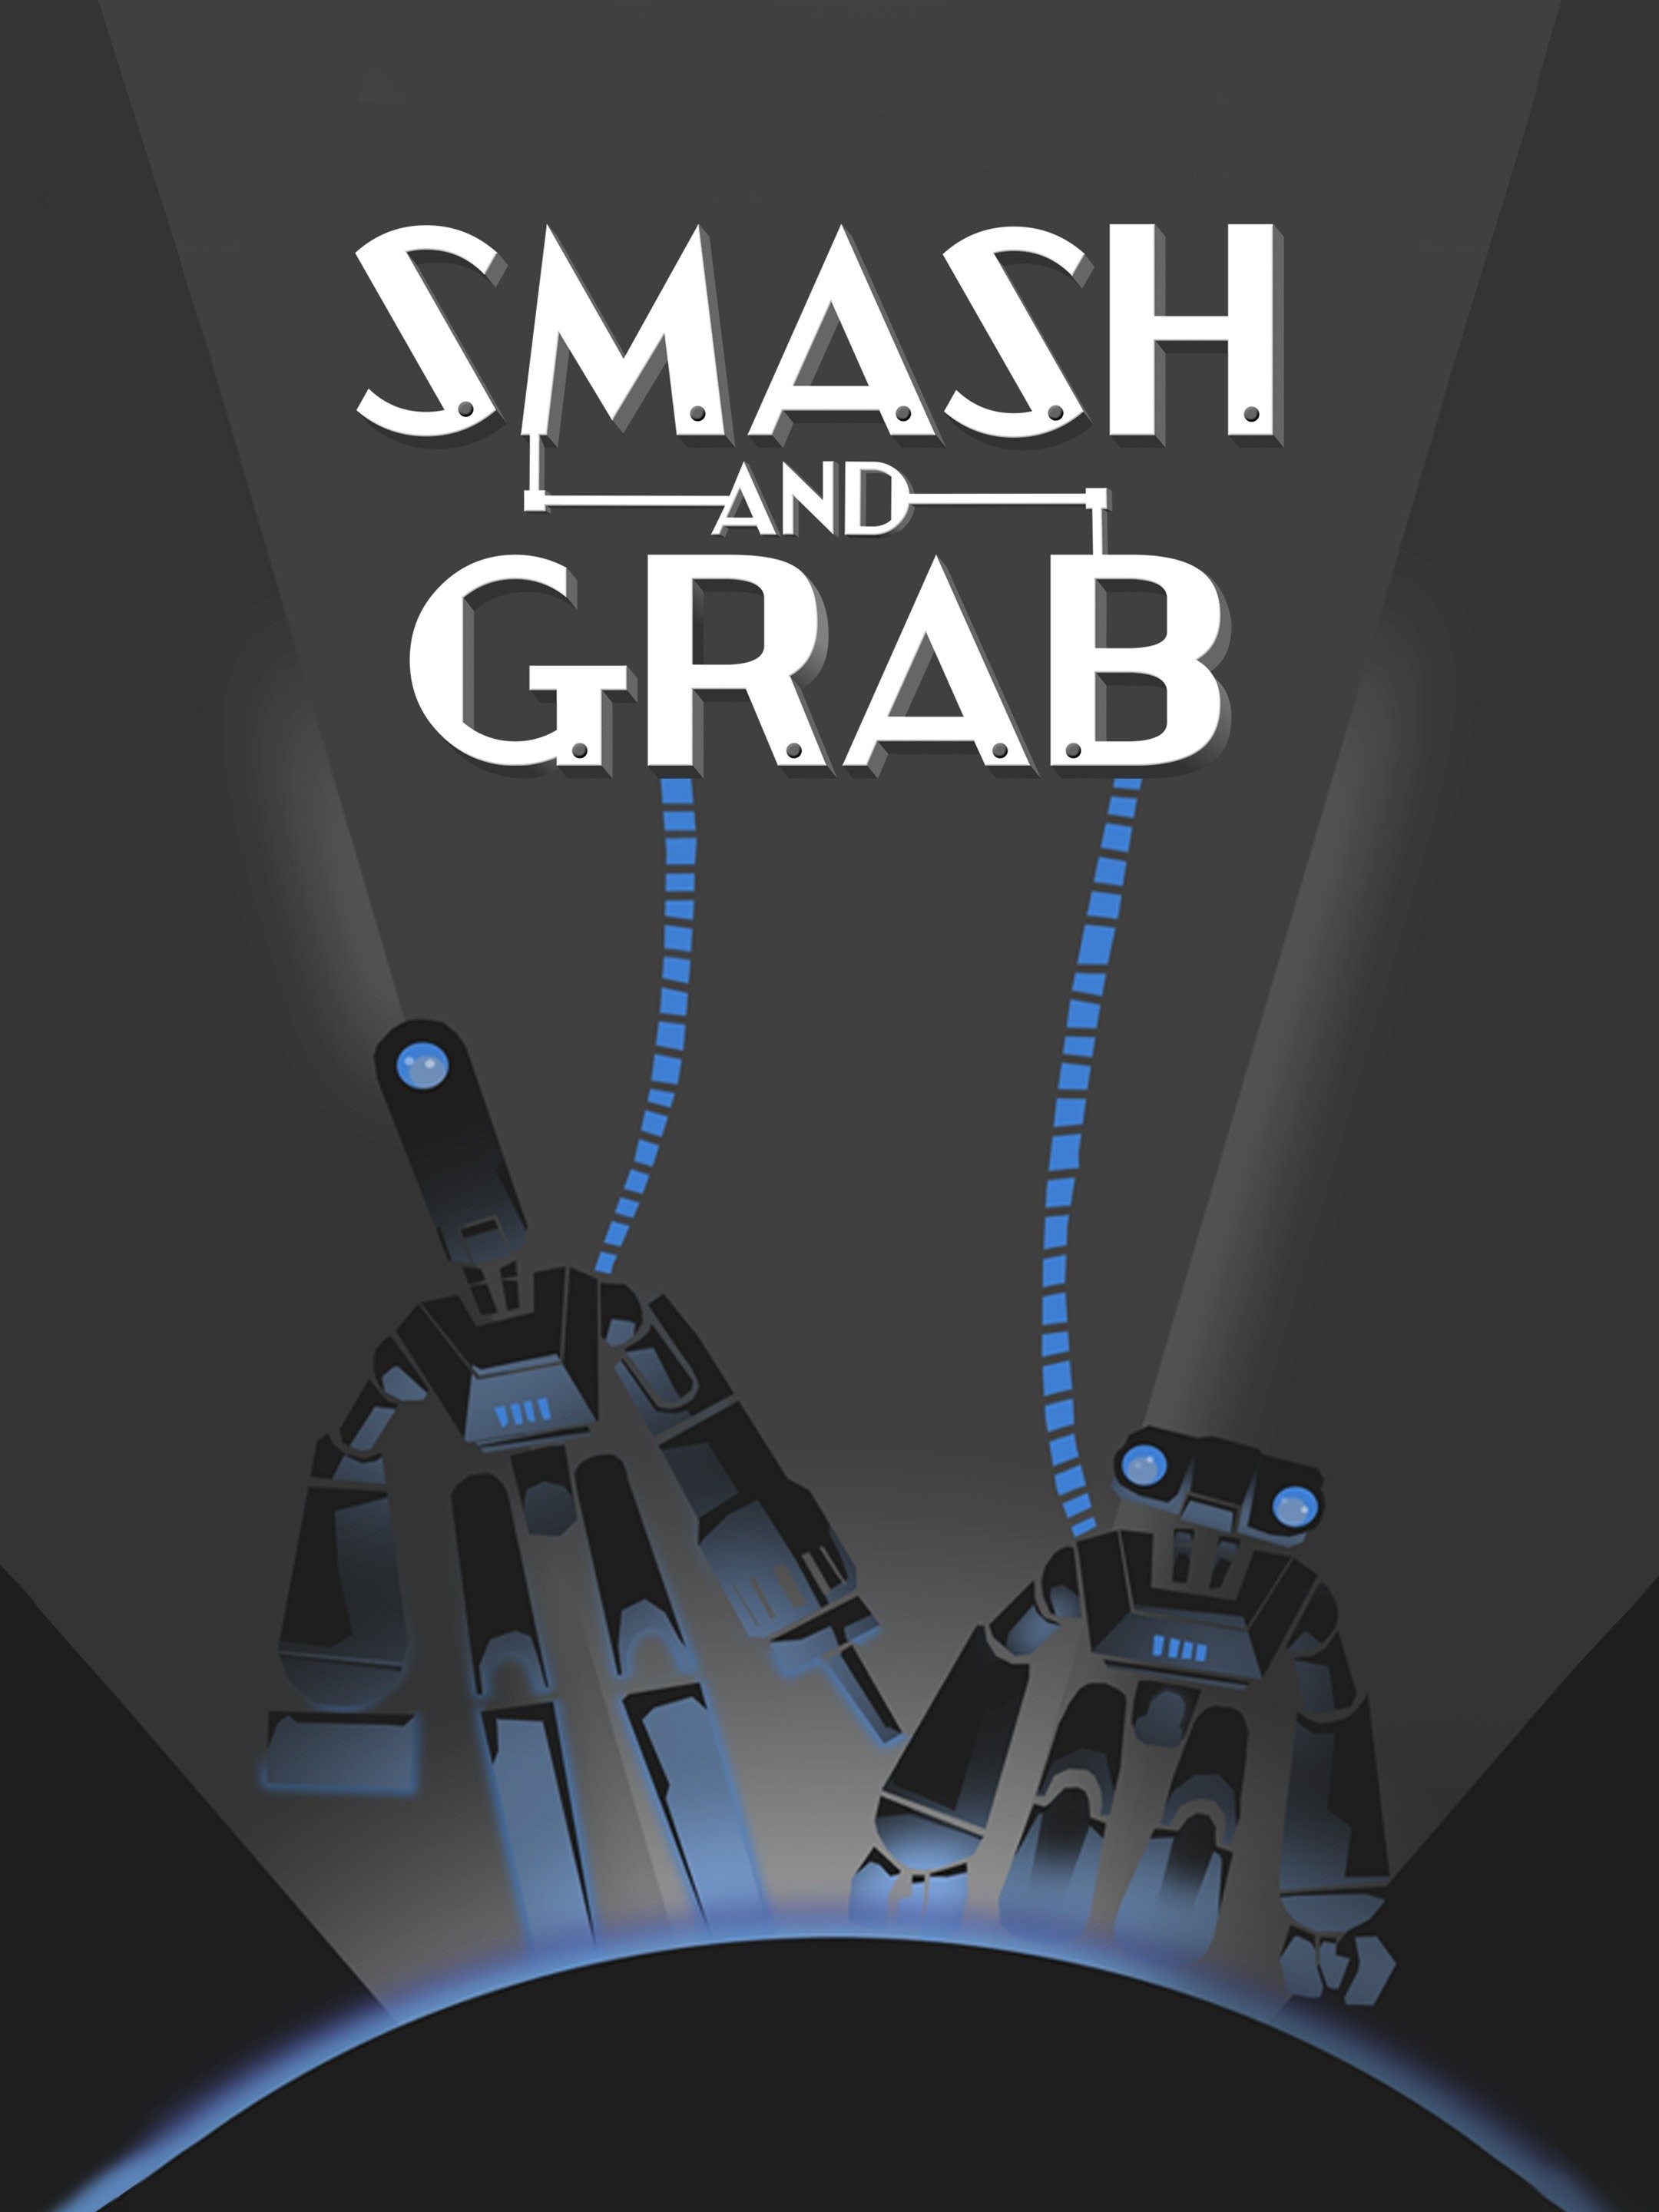 Smash and grab - Wikipedia